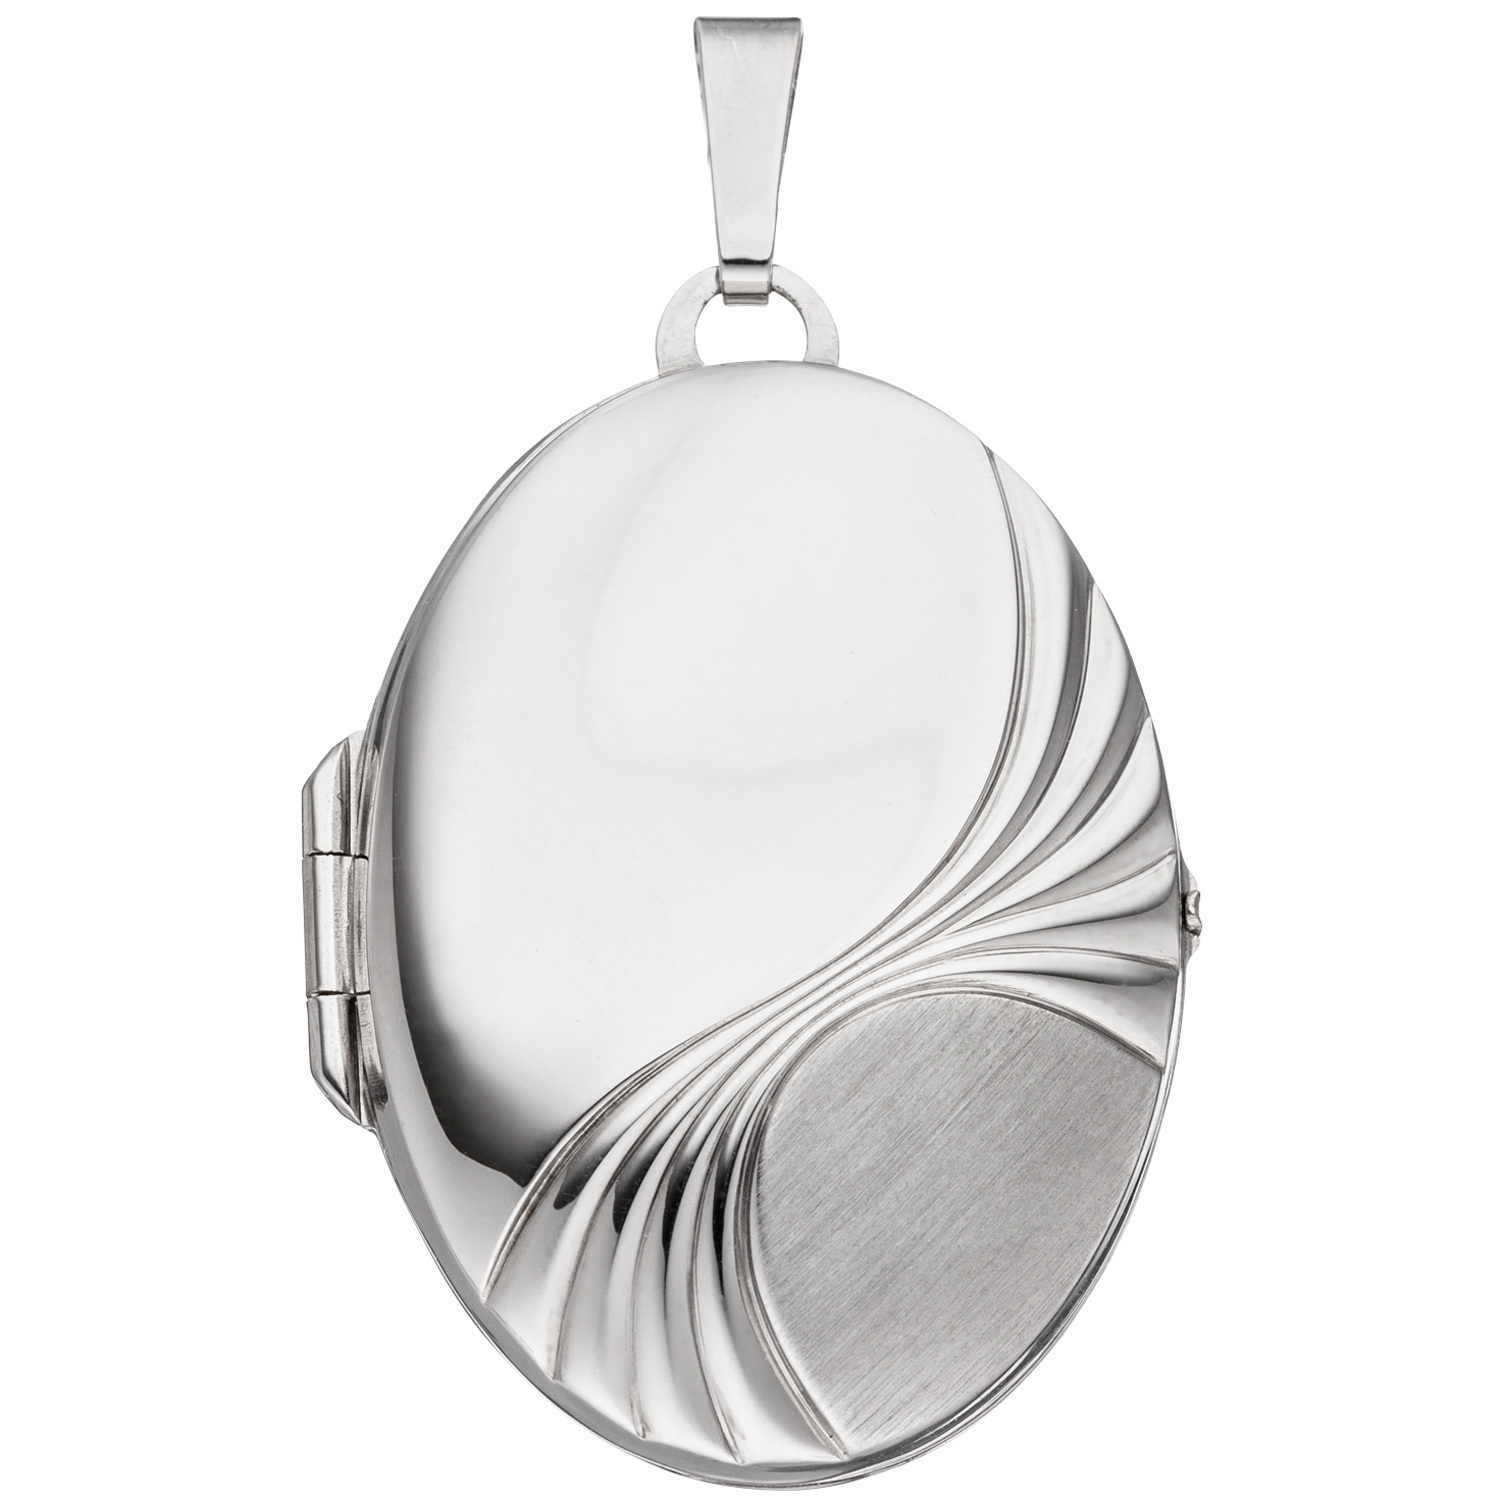 Silberanhänger Foto Medaillon oval zum öffnen 925er Sterling Silber Anhänger